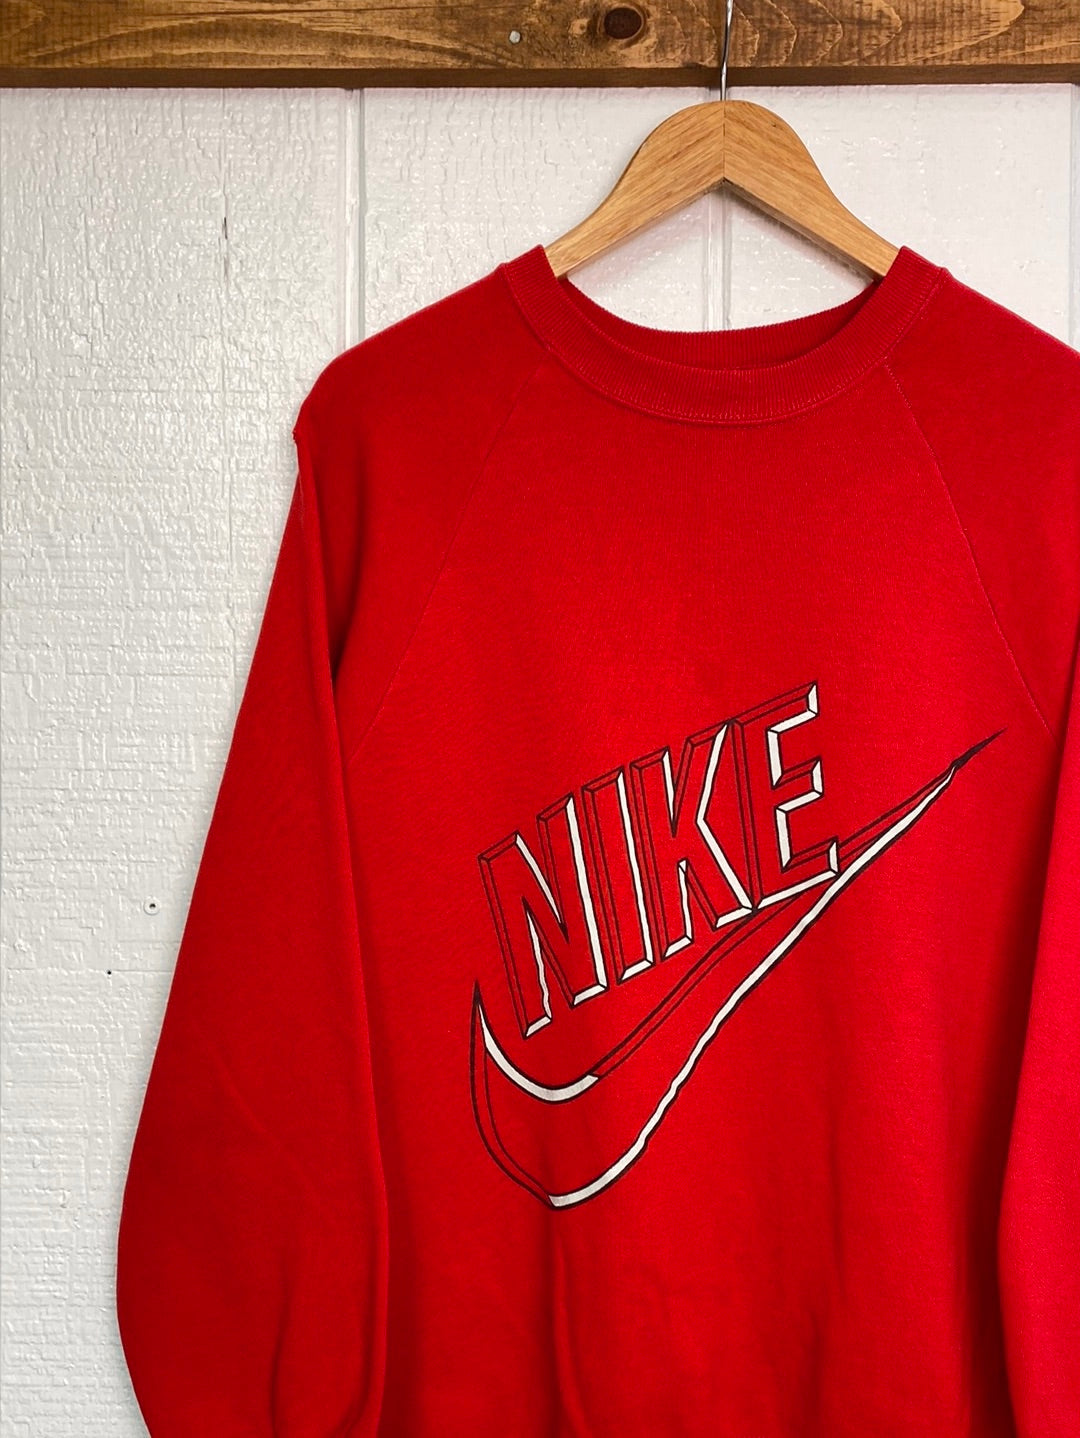 Vintage Nike Tee Shirt 80s 90s Size Medium Made in USA Swoosh